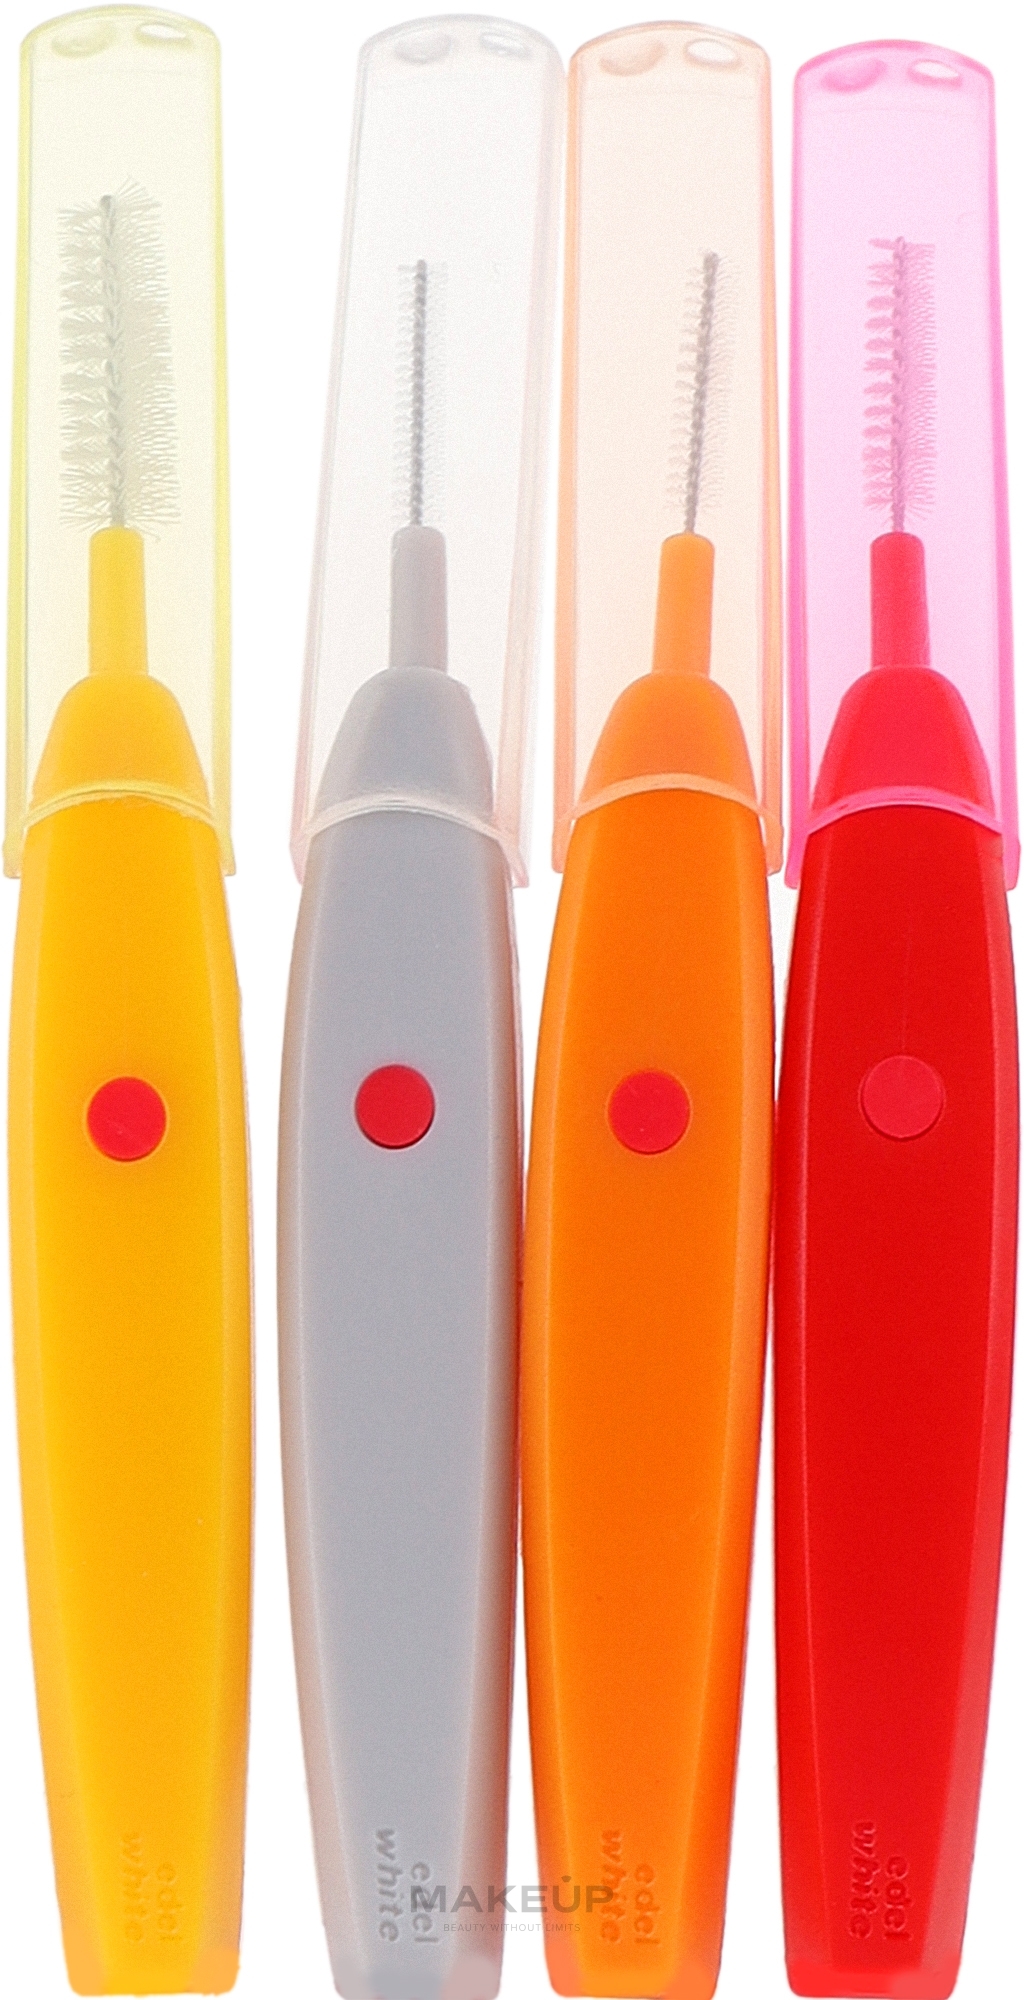 Щётки "Profi-Line" для межзубных промежутков MIX - Edel+White Dental Space Brushes MIX — фото 6шт